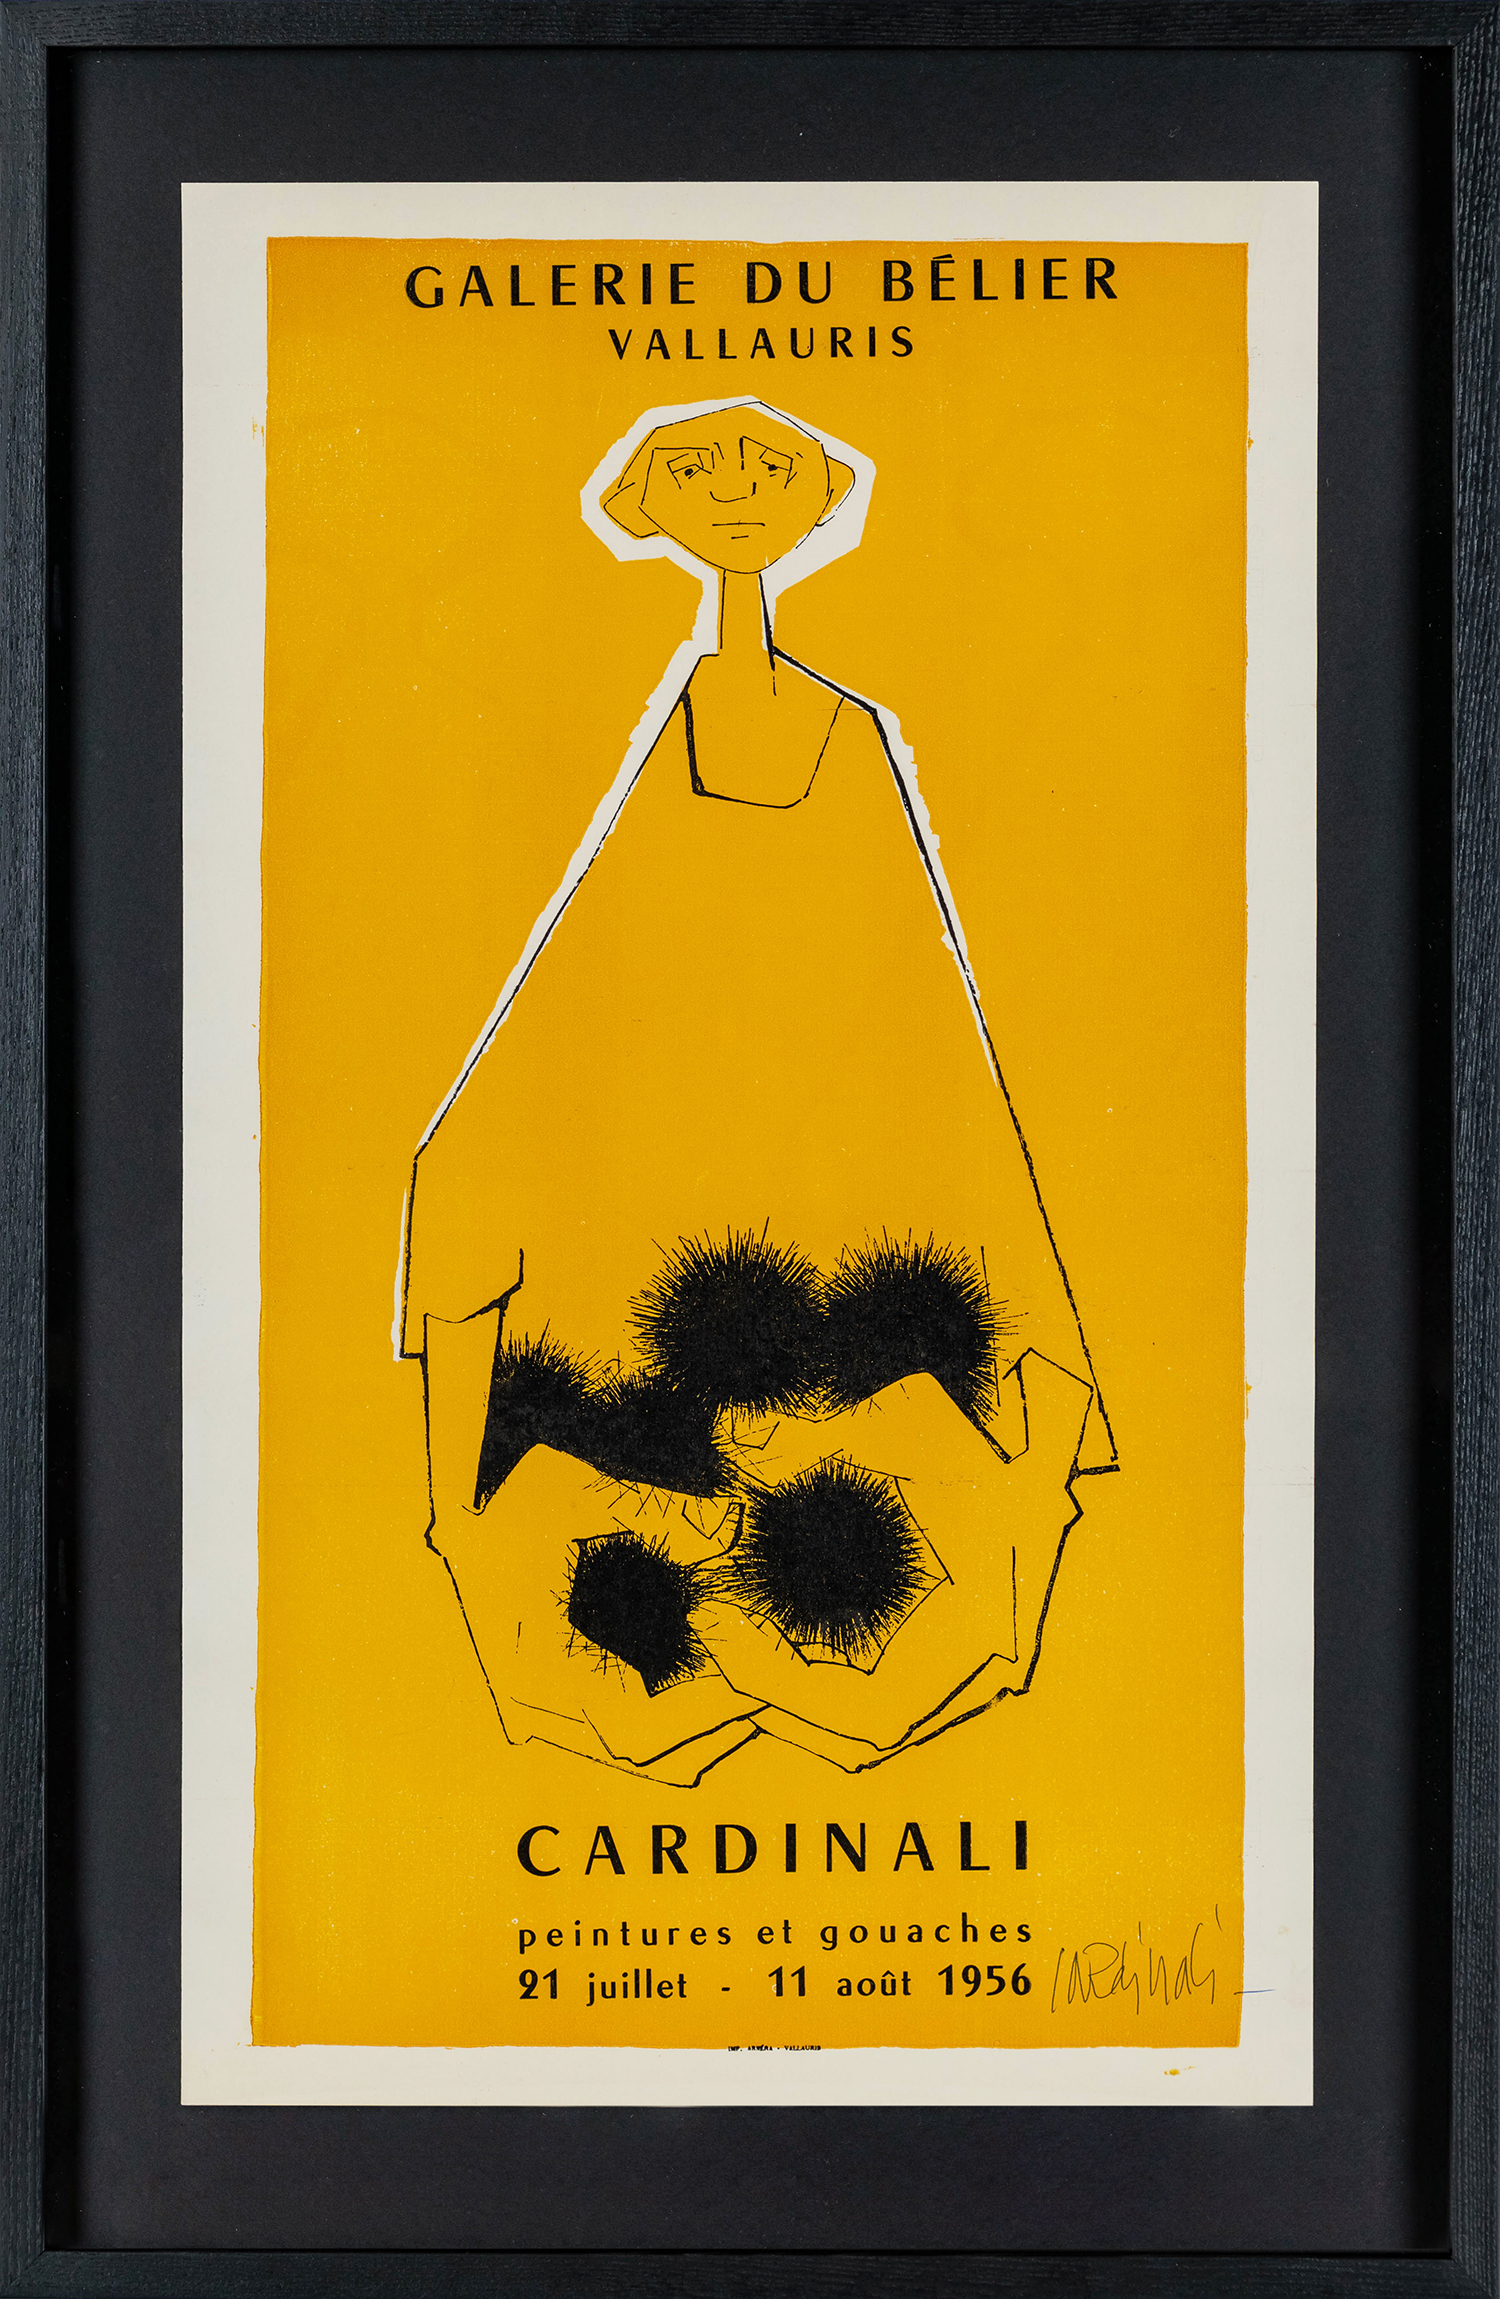 Cardinali Peintures et Gouaches, 1956 (Signed)